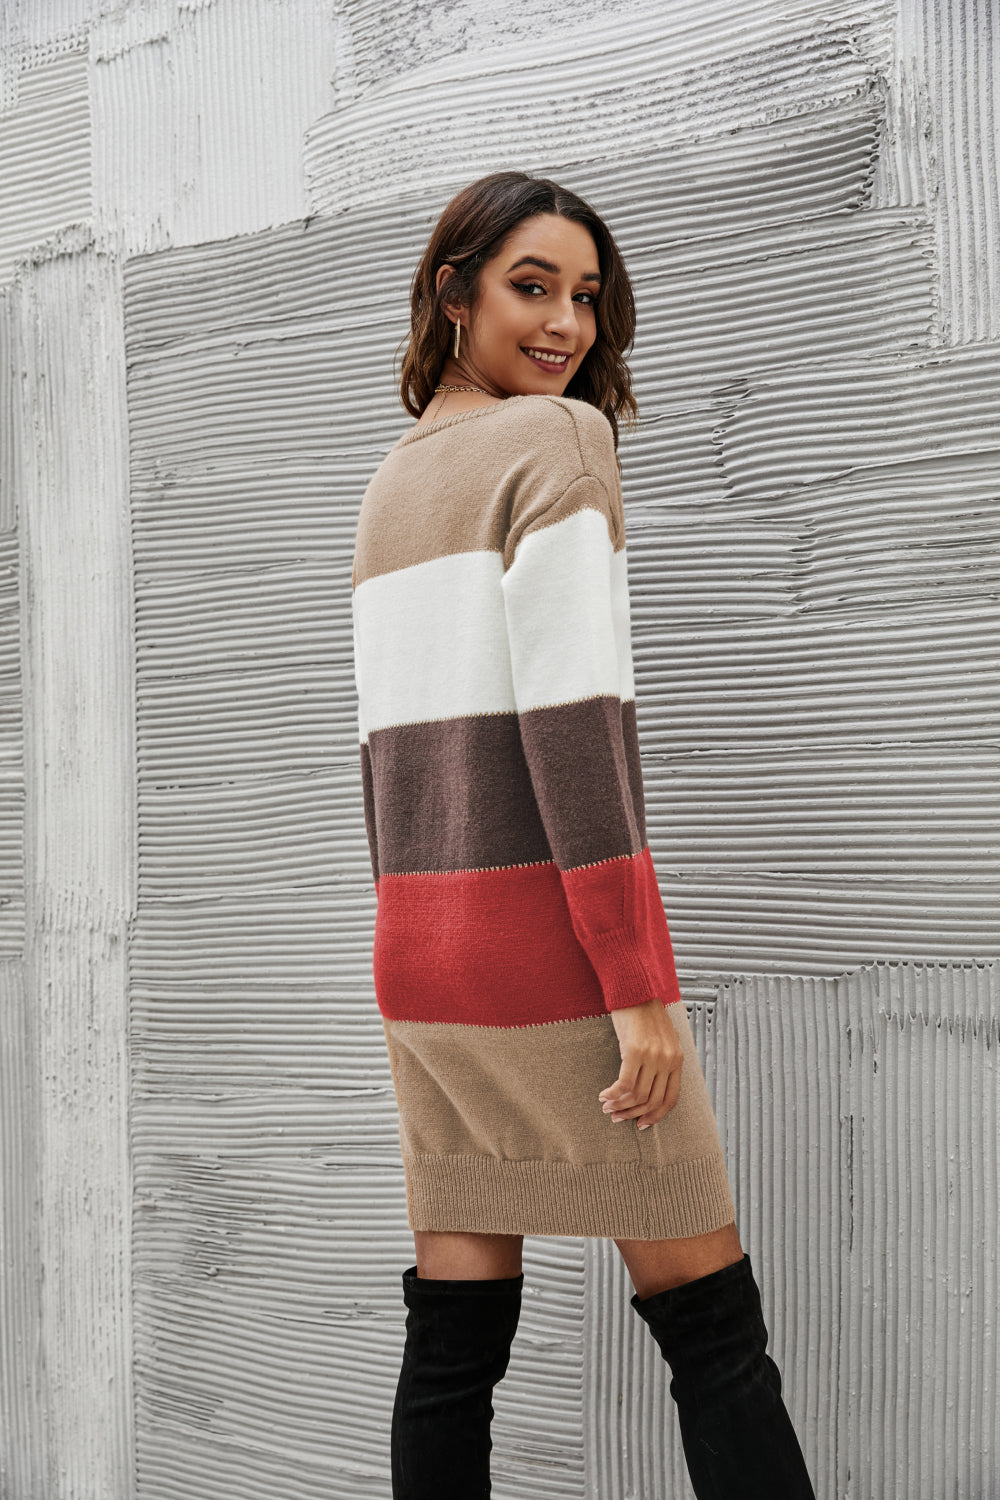 Fret Not Striped Sweater Dress   